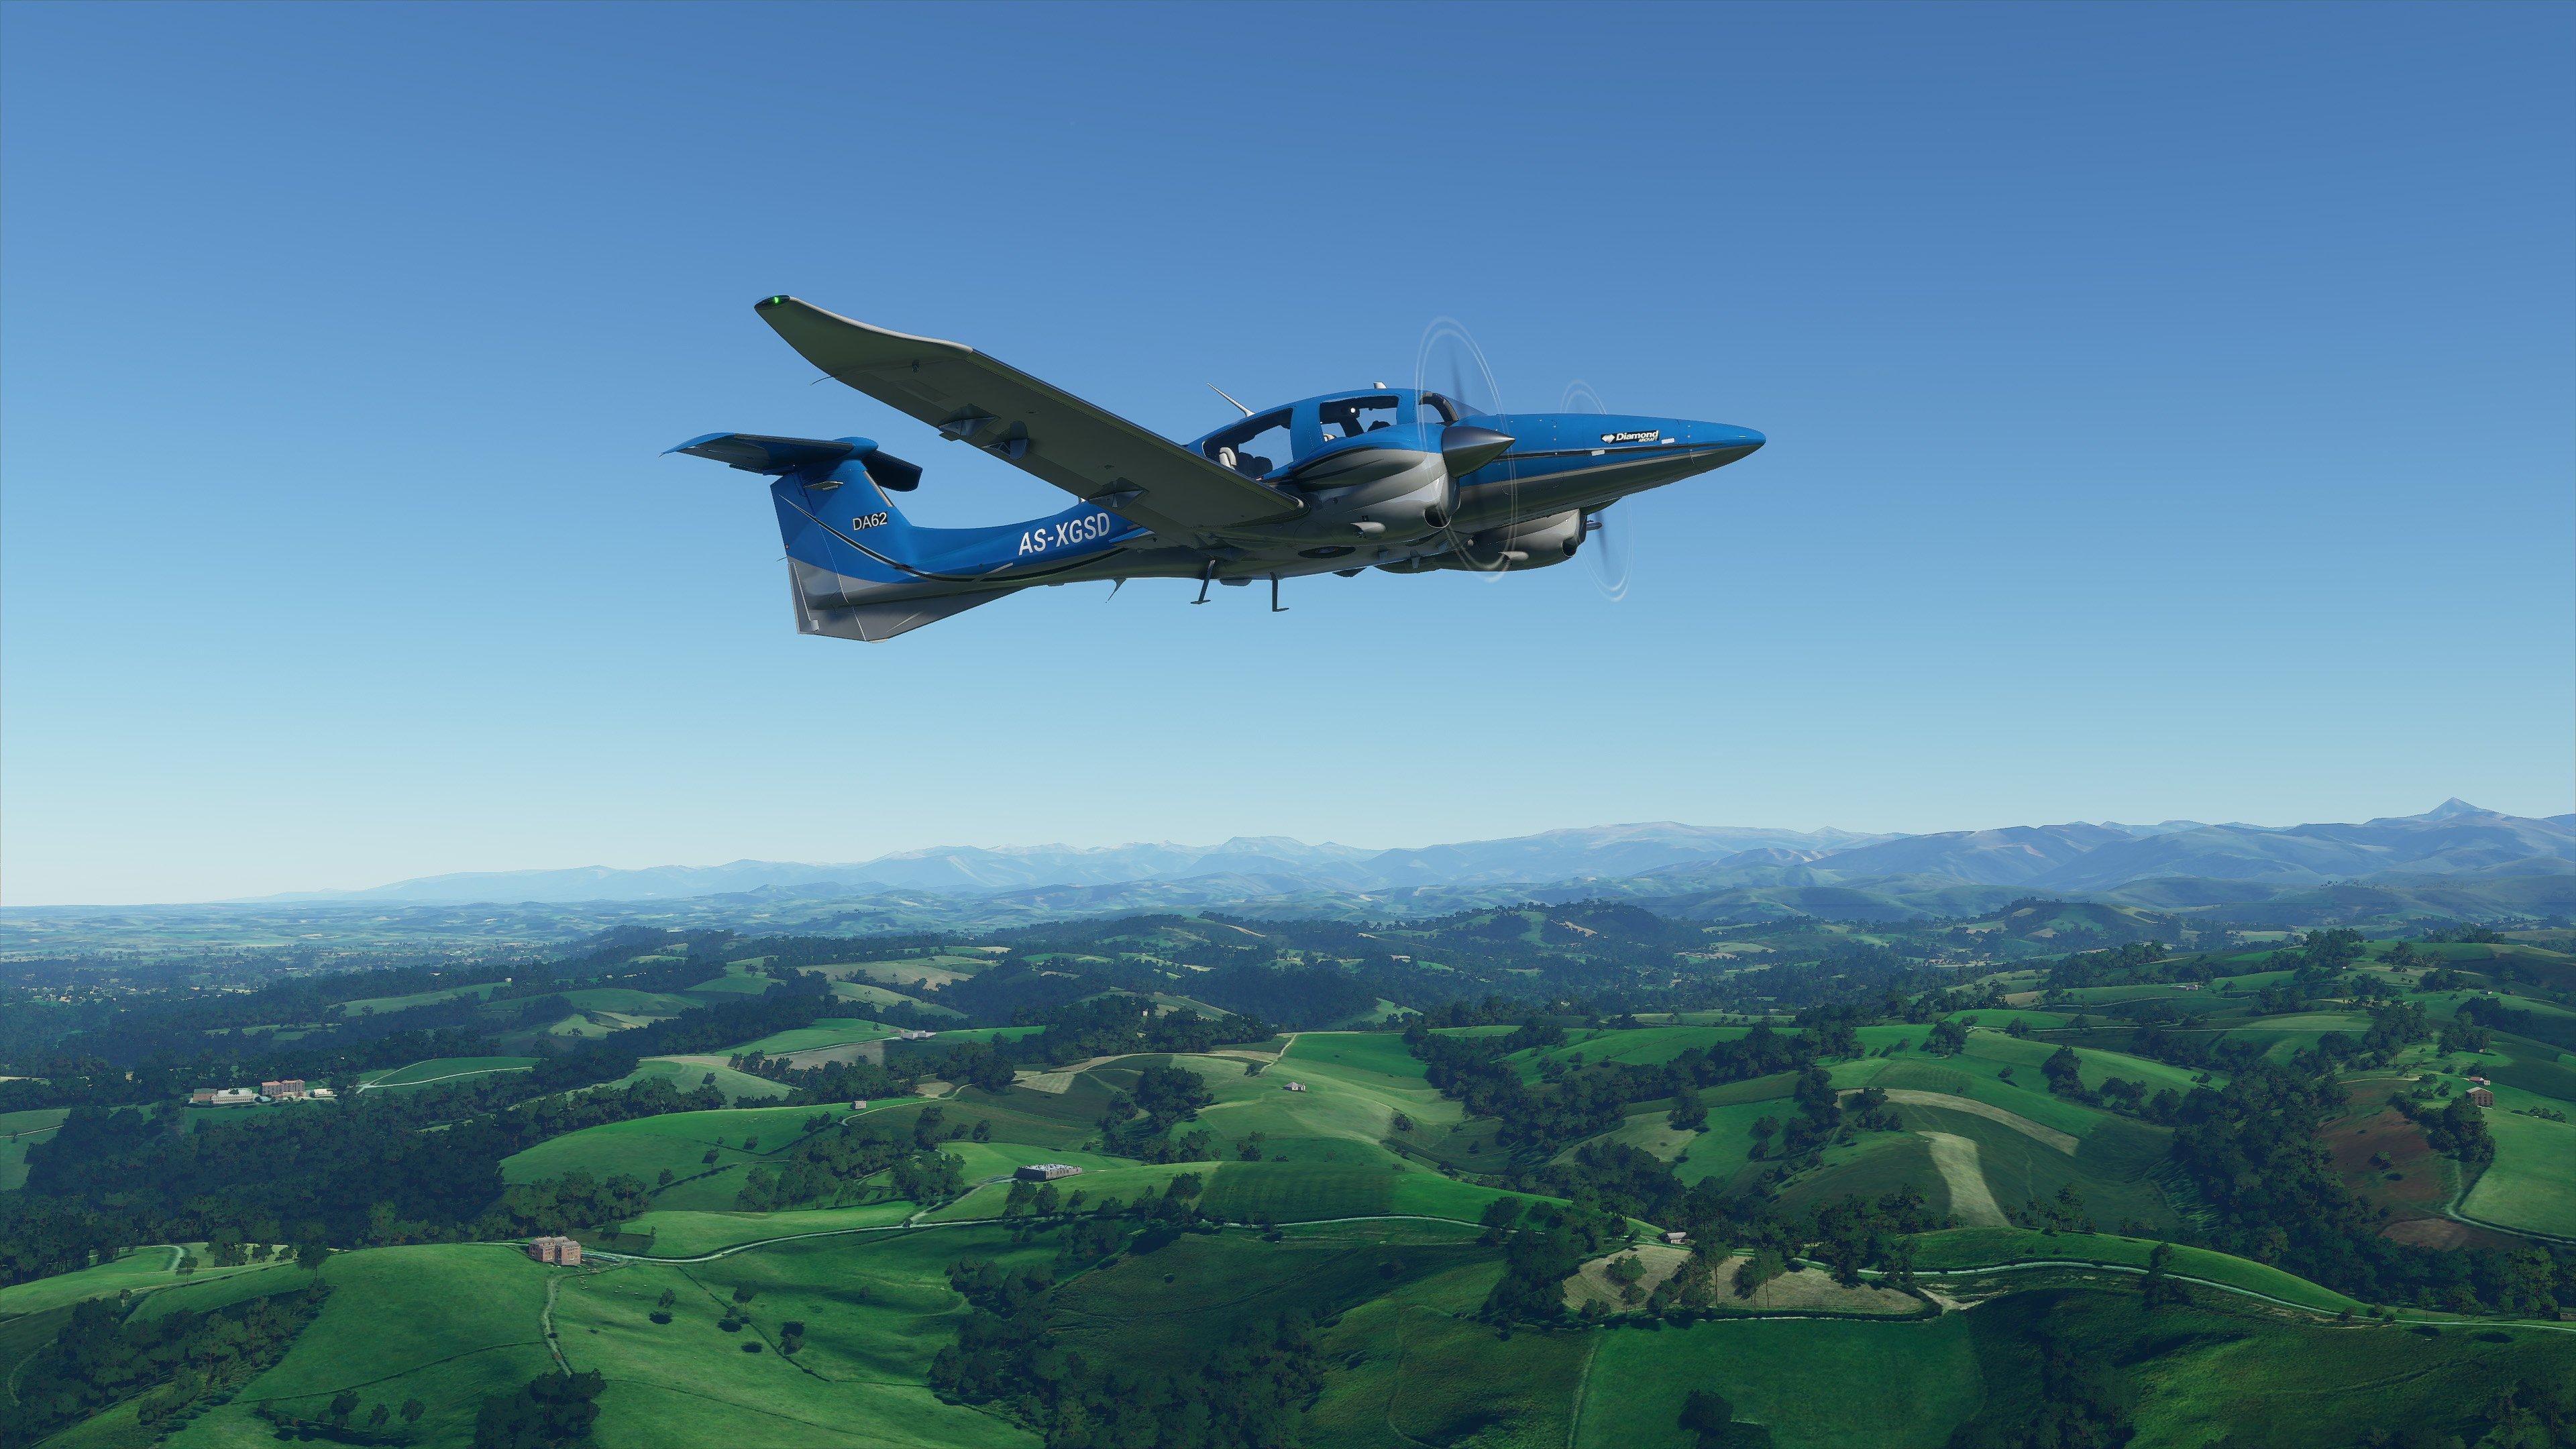 Microsoft Flight Simulator (Disc) - [Xbox Series X]